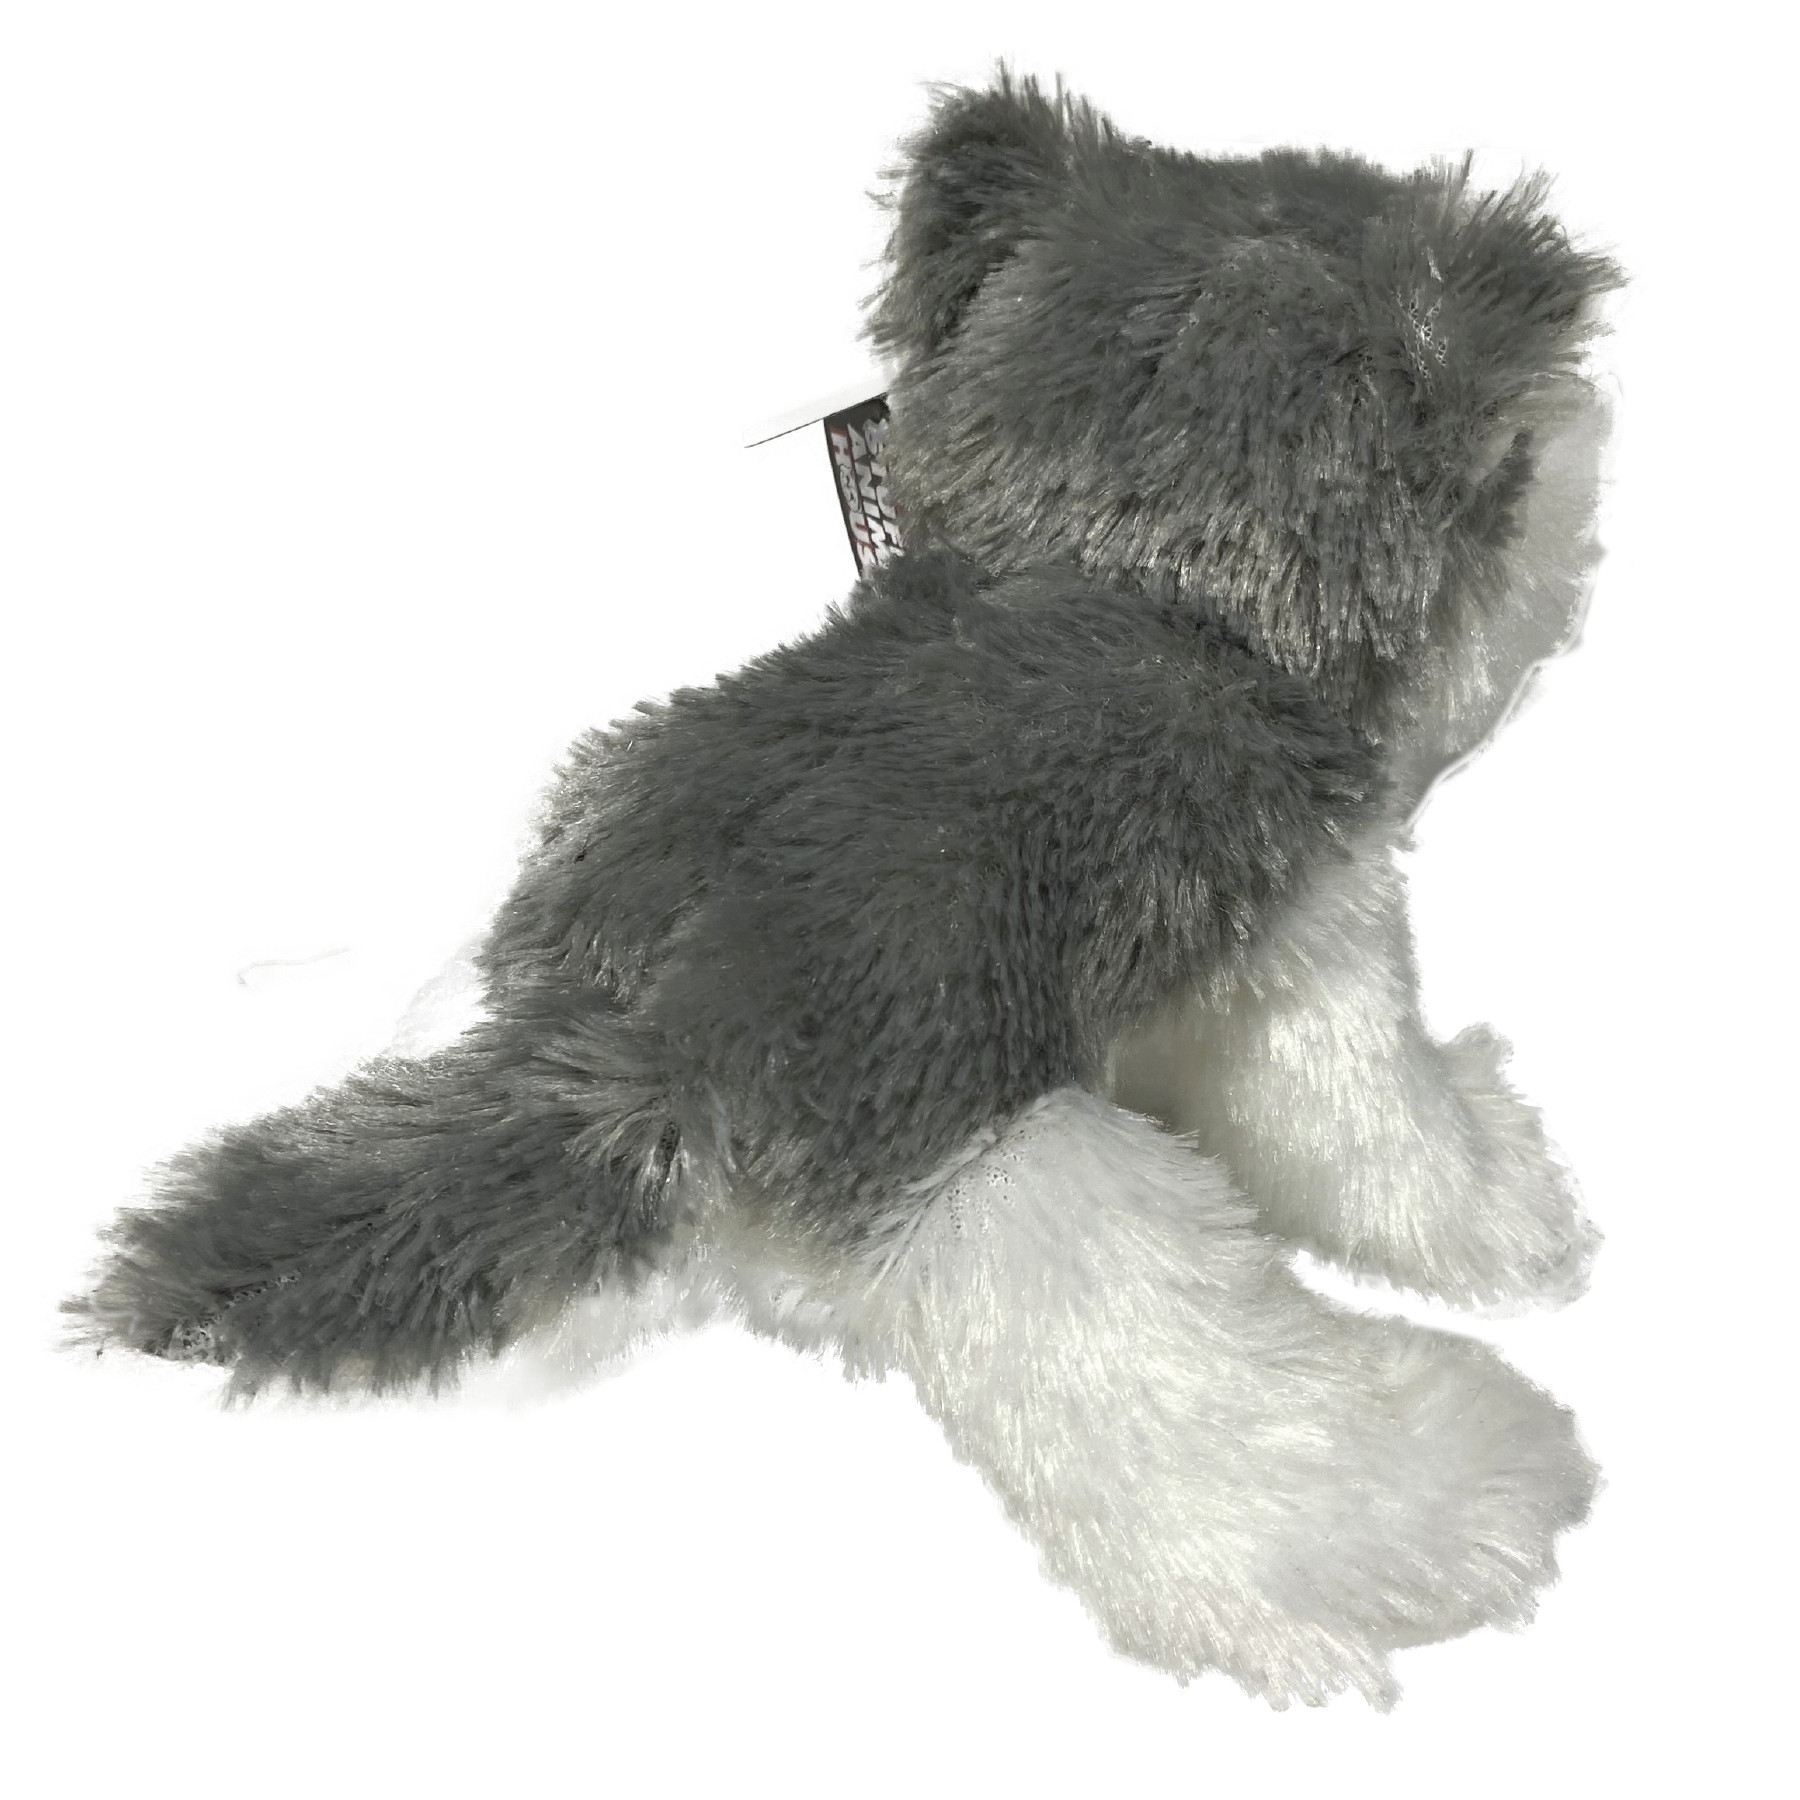 7" Maplefoot Husky stuffed animal side view